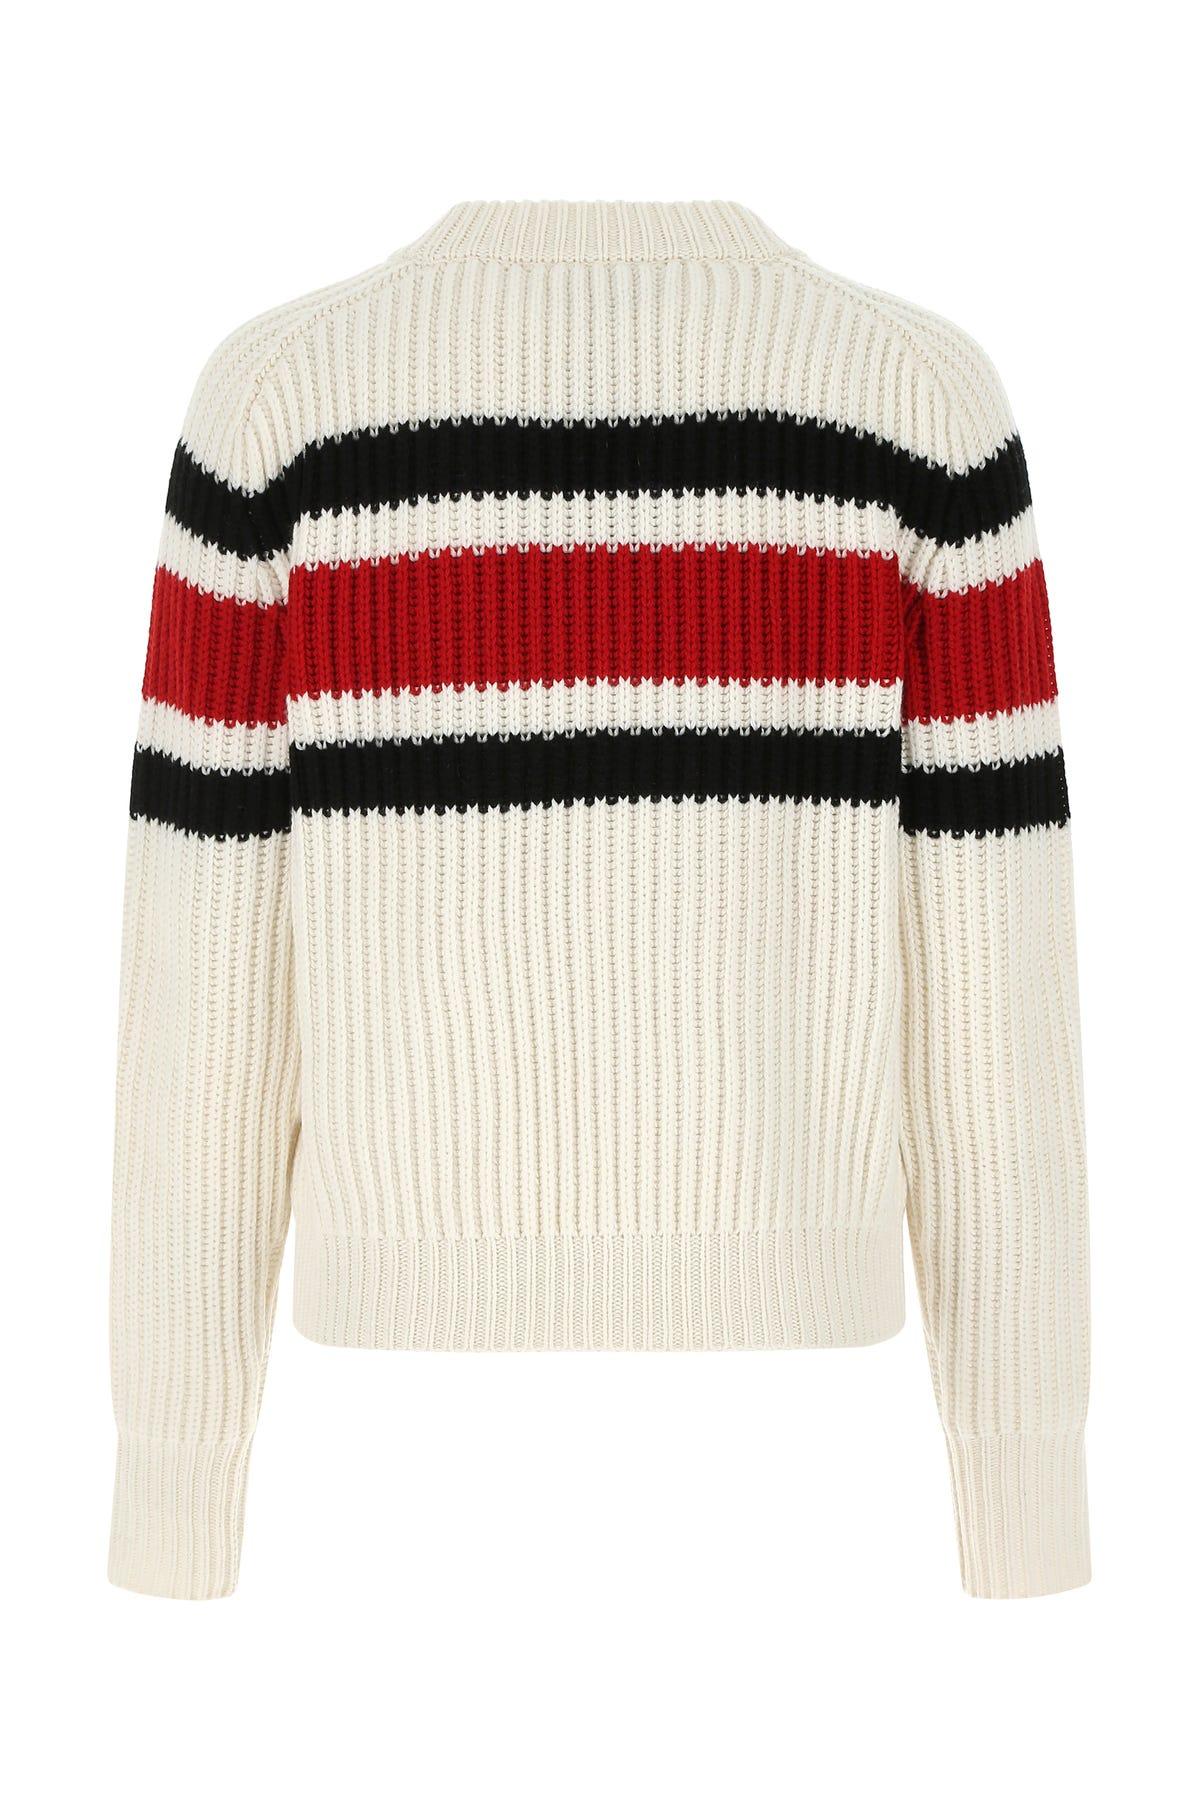 Prada Cashmere Sweater in White | Lyst